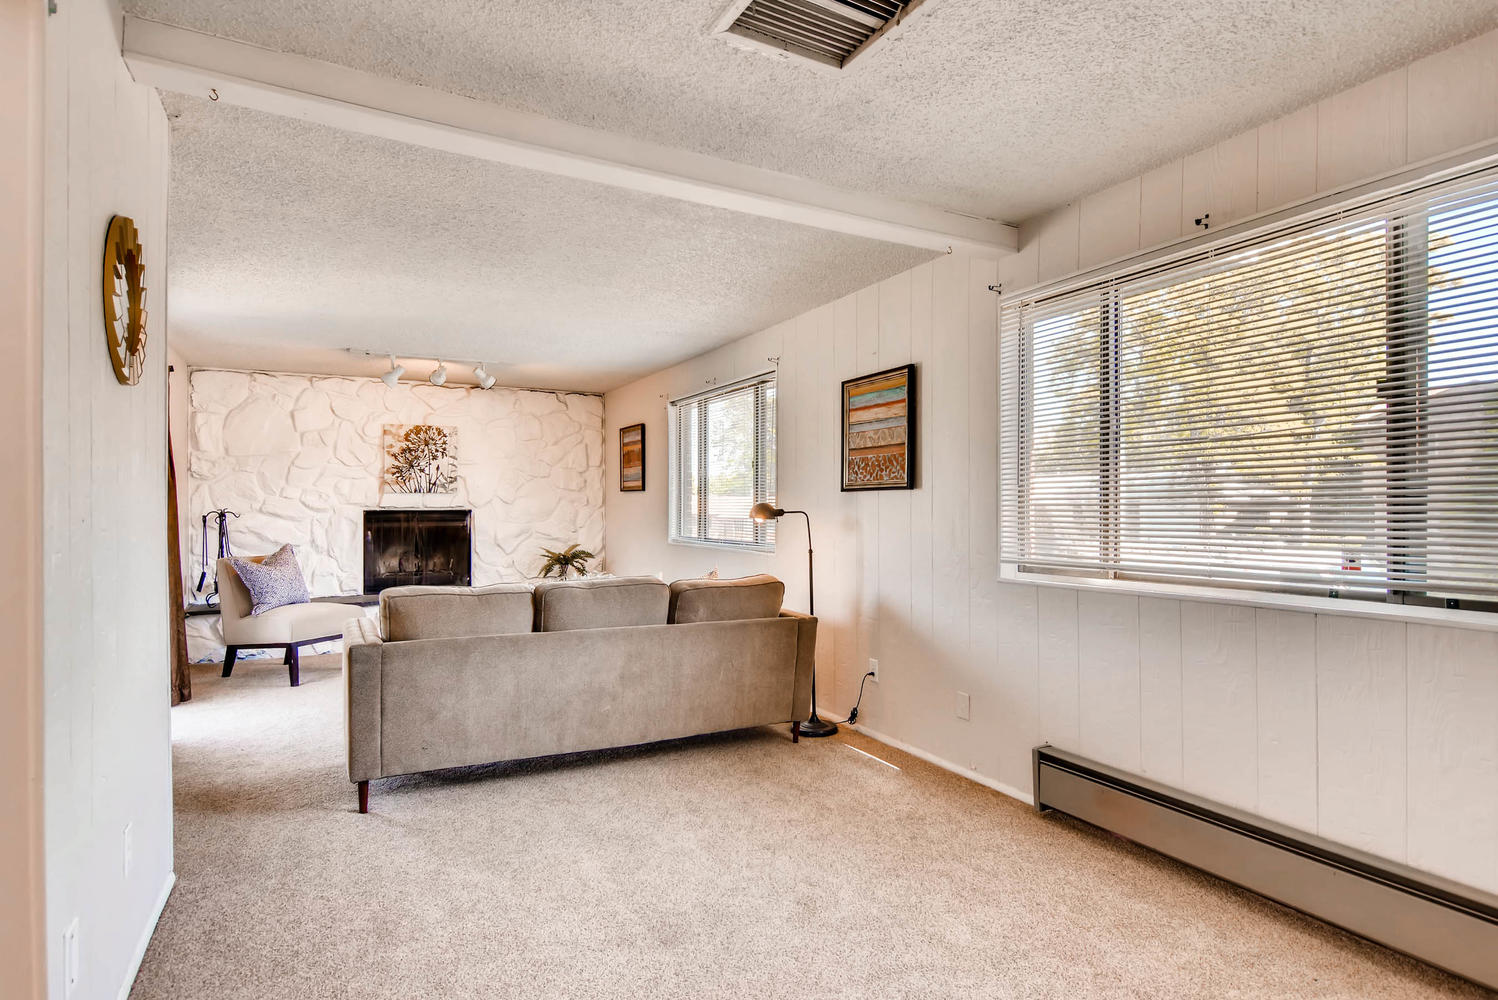 Real Estate Listing: 8305 Mitze Way Denver Family Room